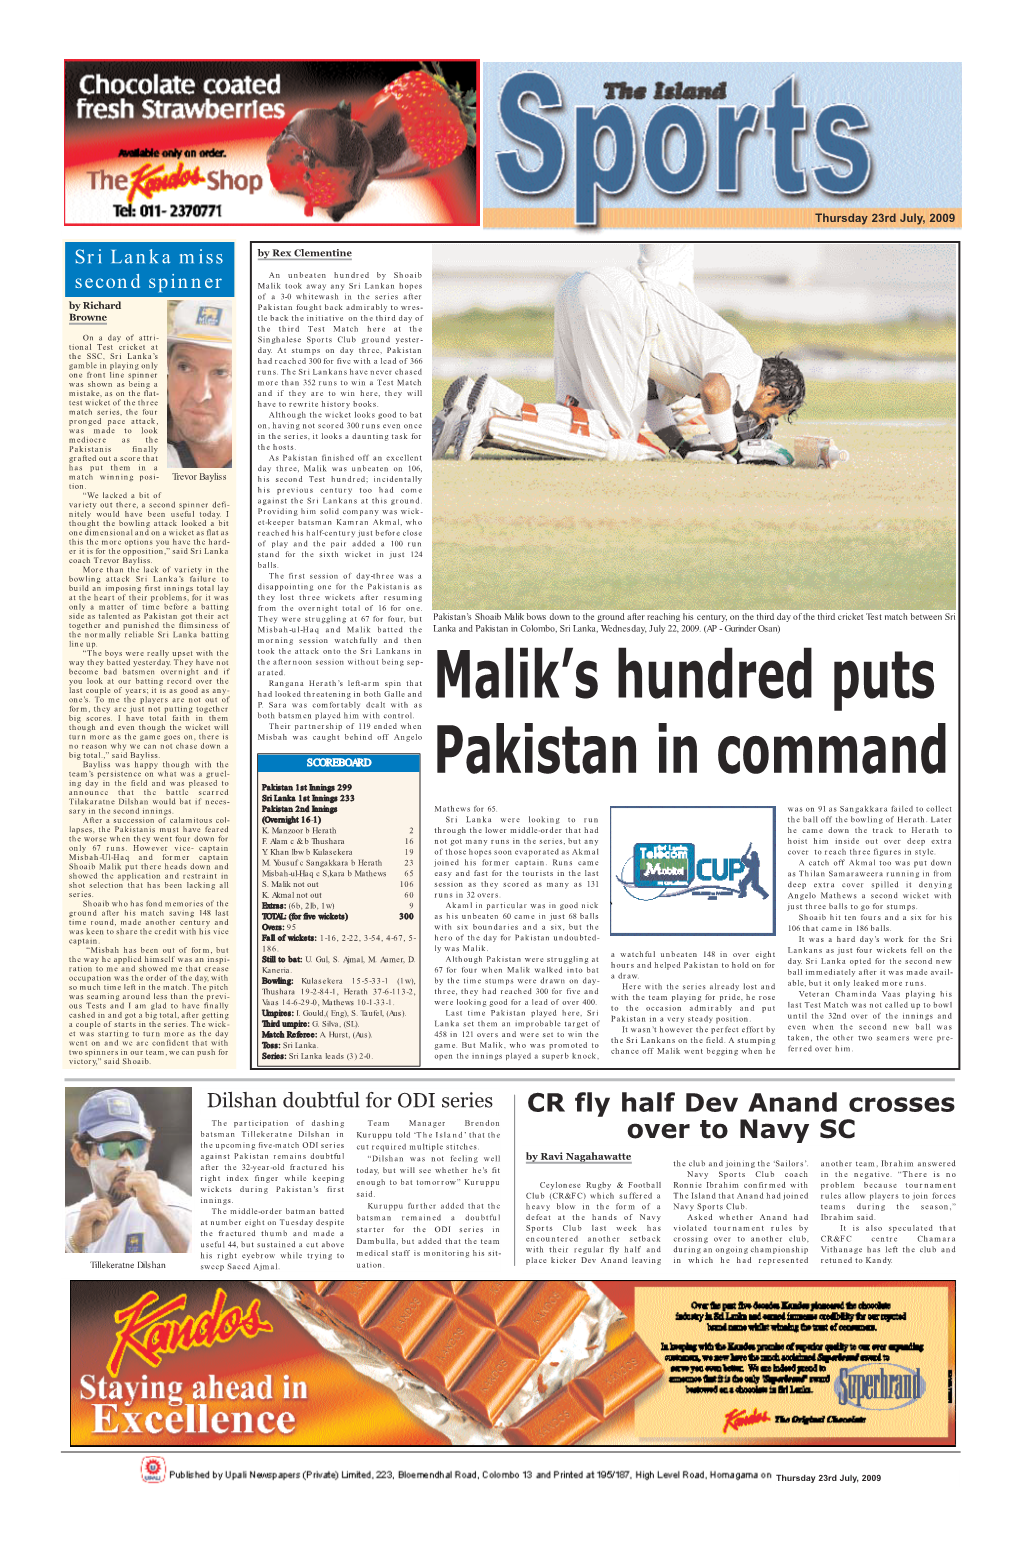 Malik's Hundred Puts Pakistan in Command